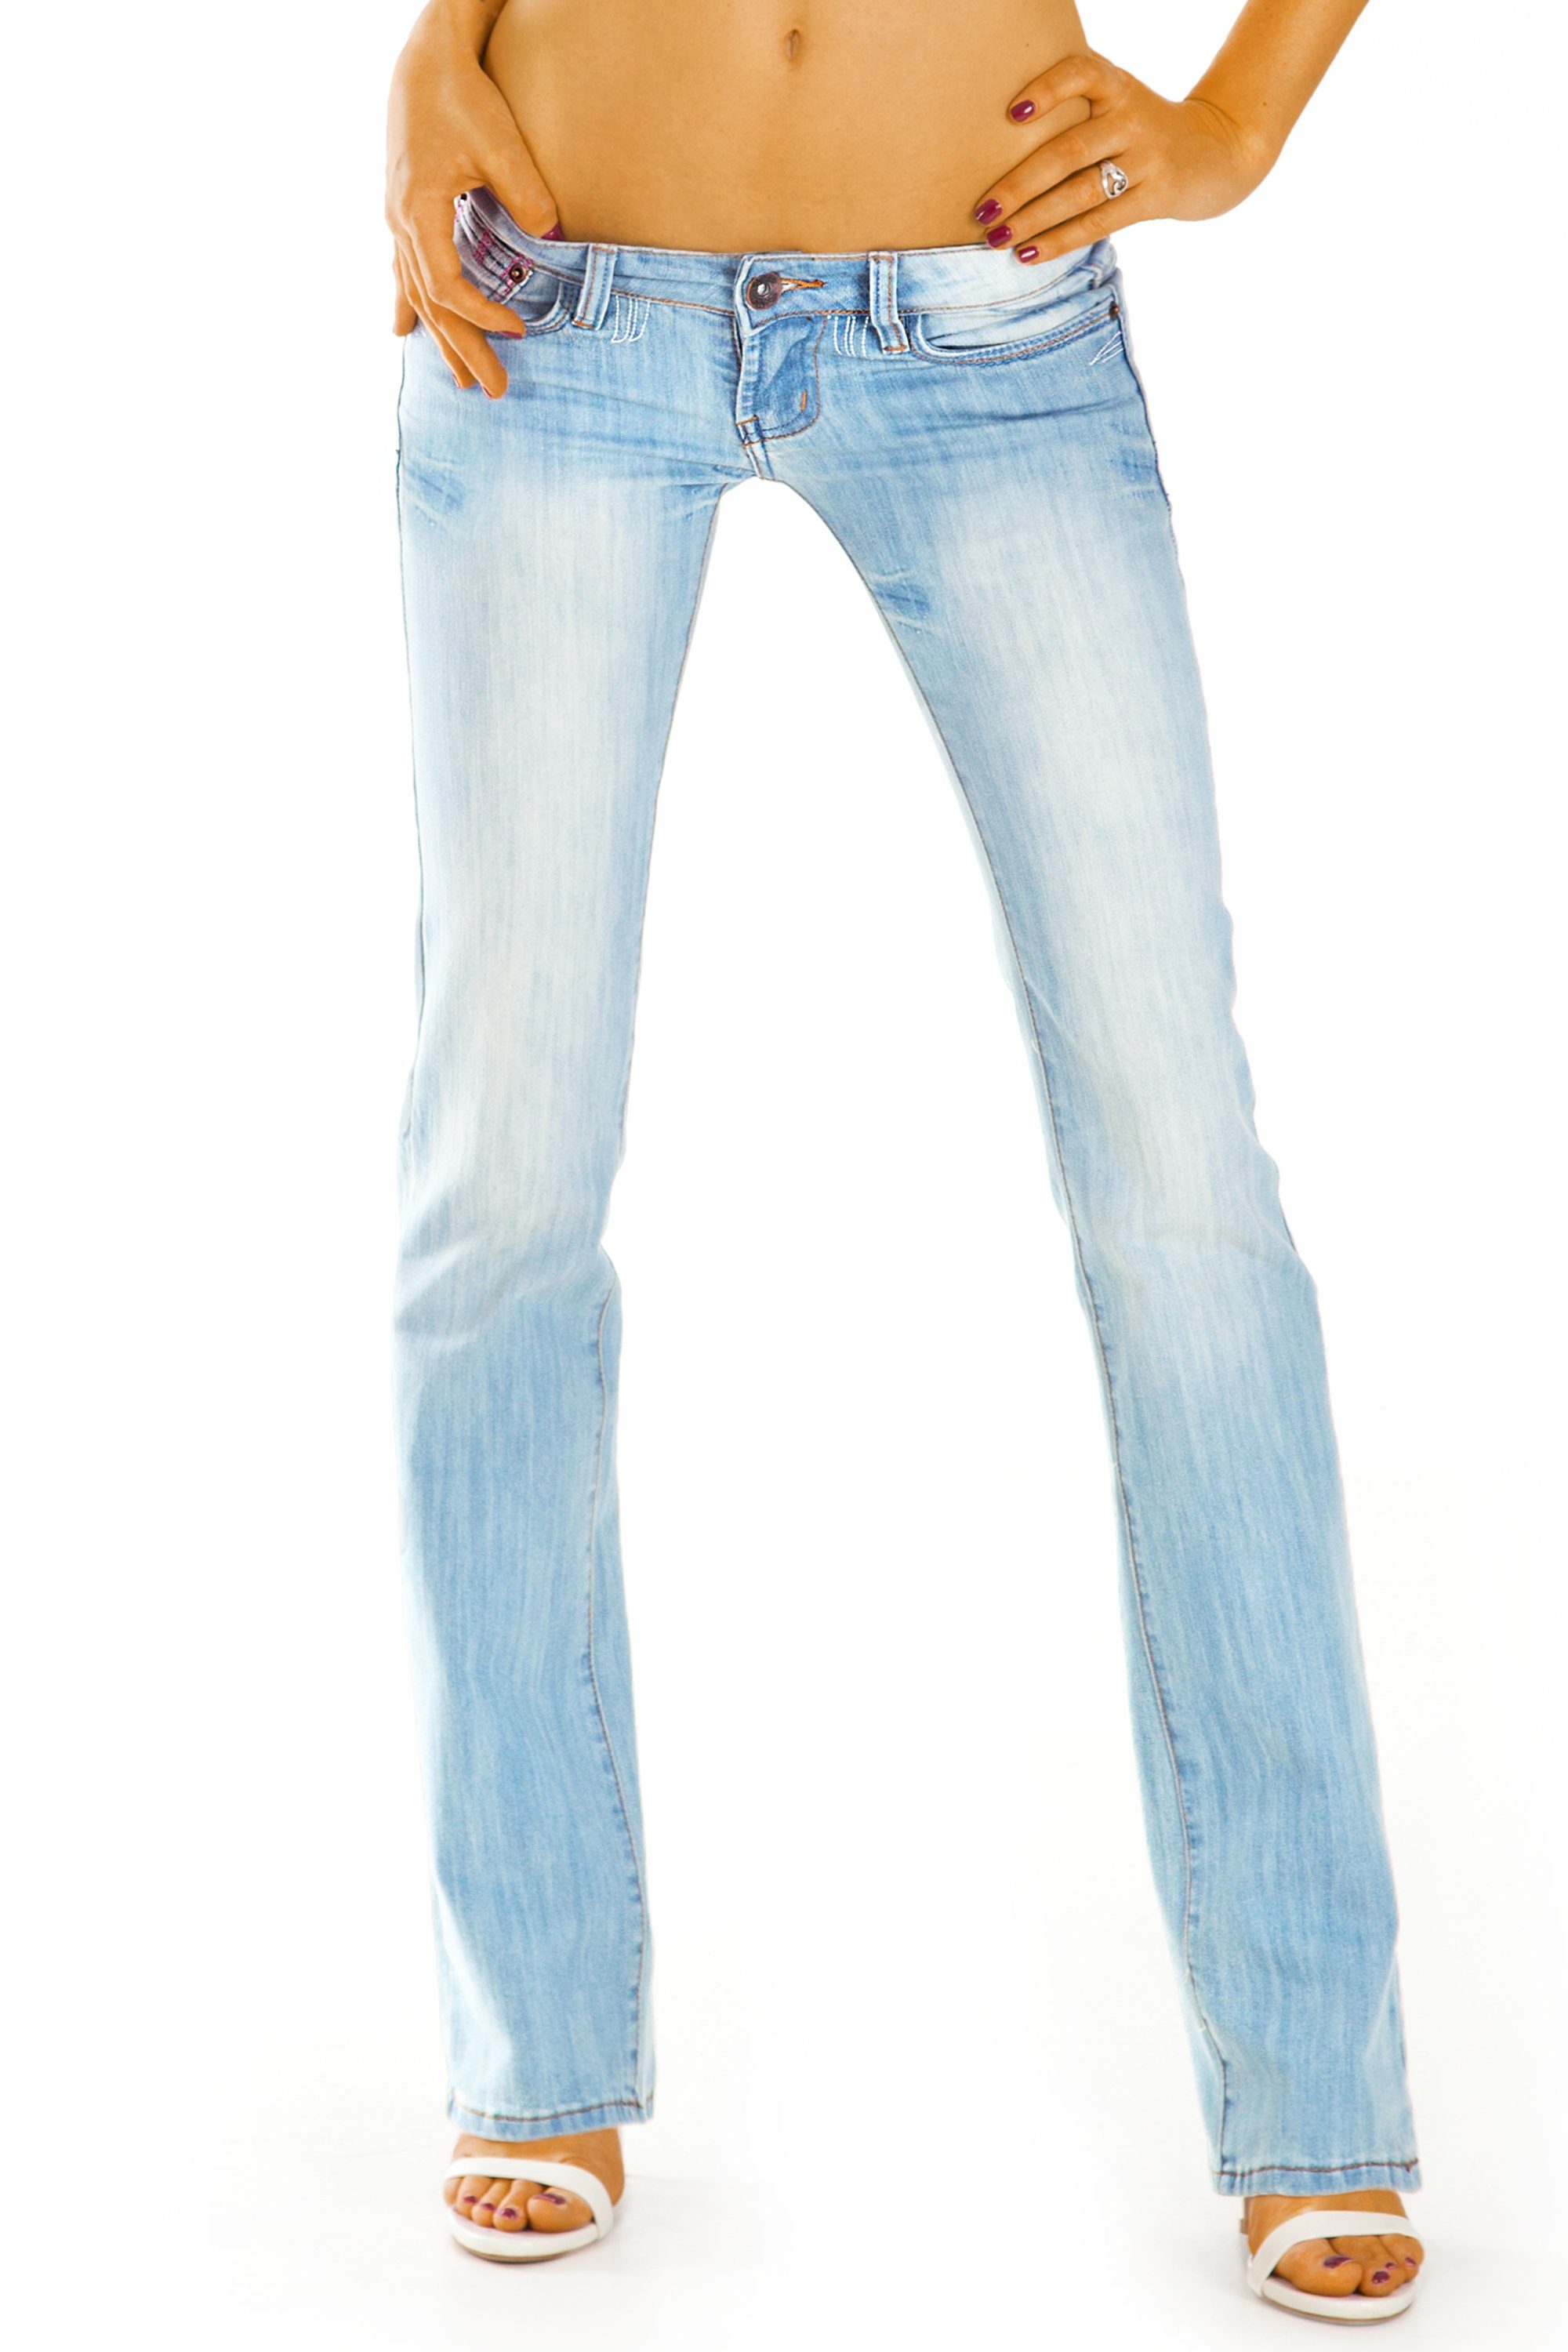 be styled Bootcut-Jeans »Damen Hüftjeans extrem tiefer Leibhöhe - Bootcut  Jeanshose - j37a-1« sehr niedrige Leibhöhe, mit Stretch-Anteil,  5-pOcket-Style